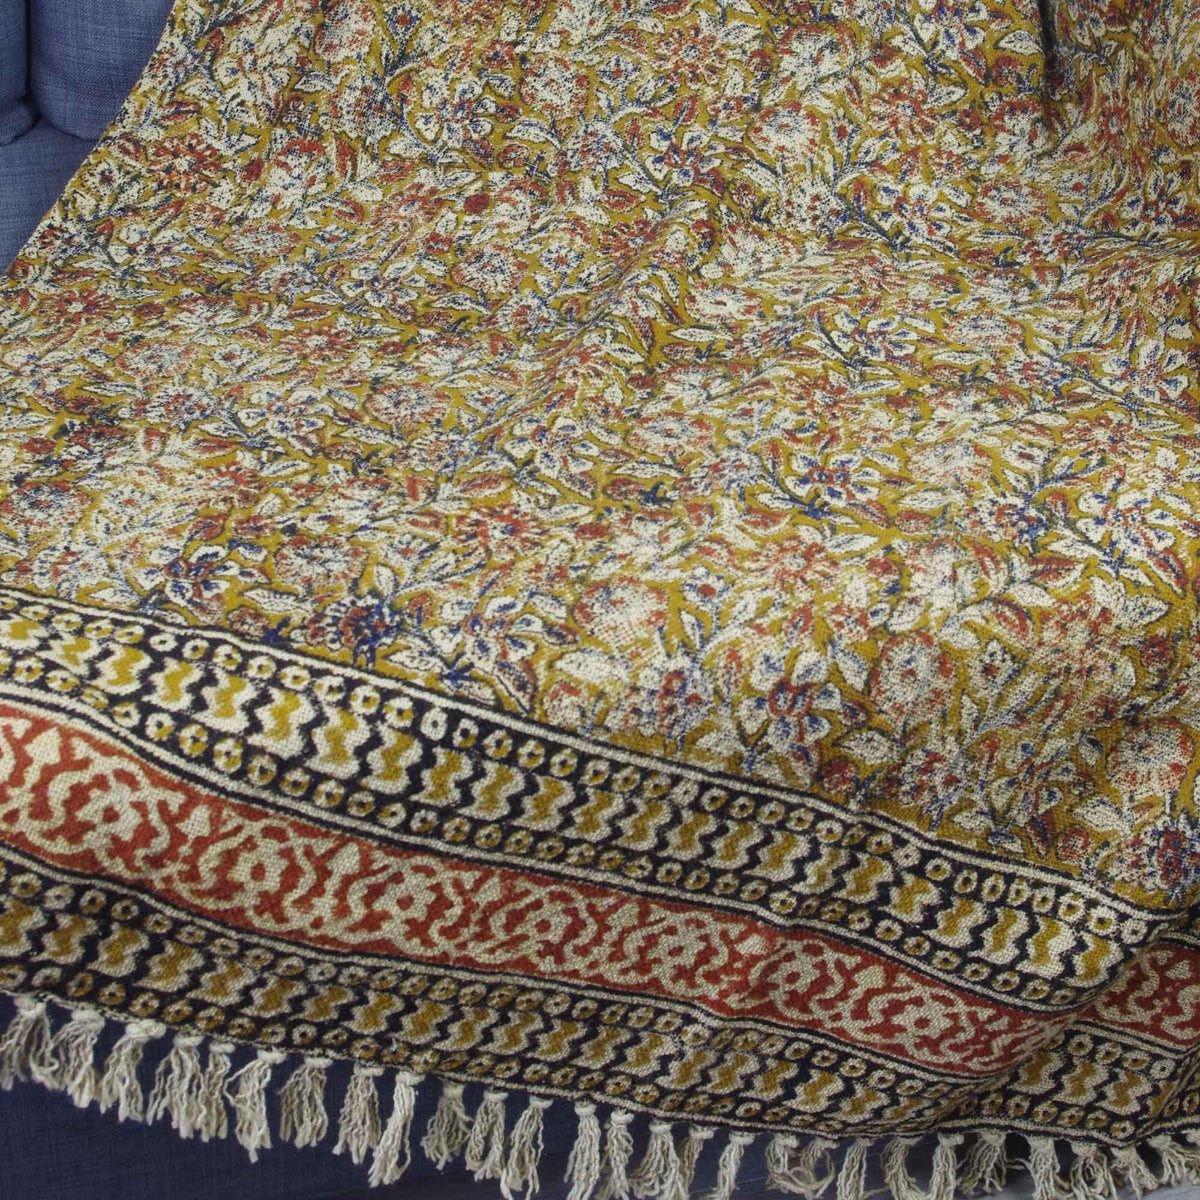 Handloom Mud Cloth Block Printed Cotton Sofa Throw With Tassels - Floral Jaal